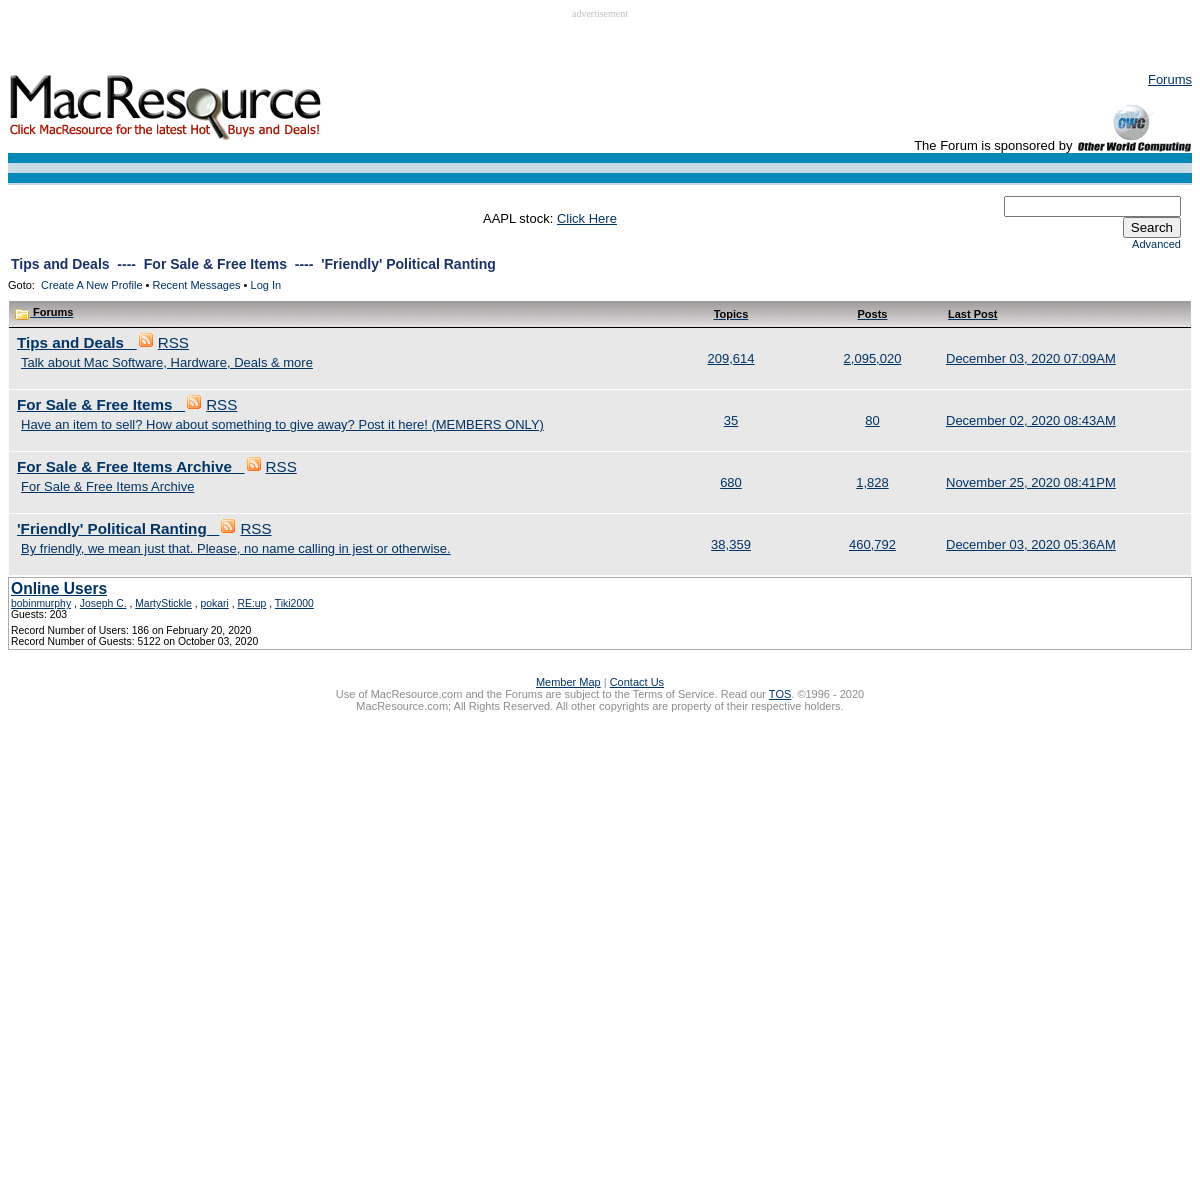 A complete backup of macresource.com